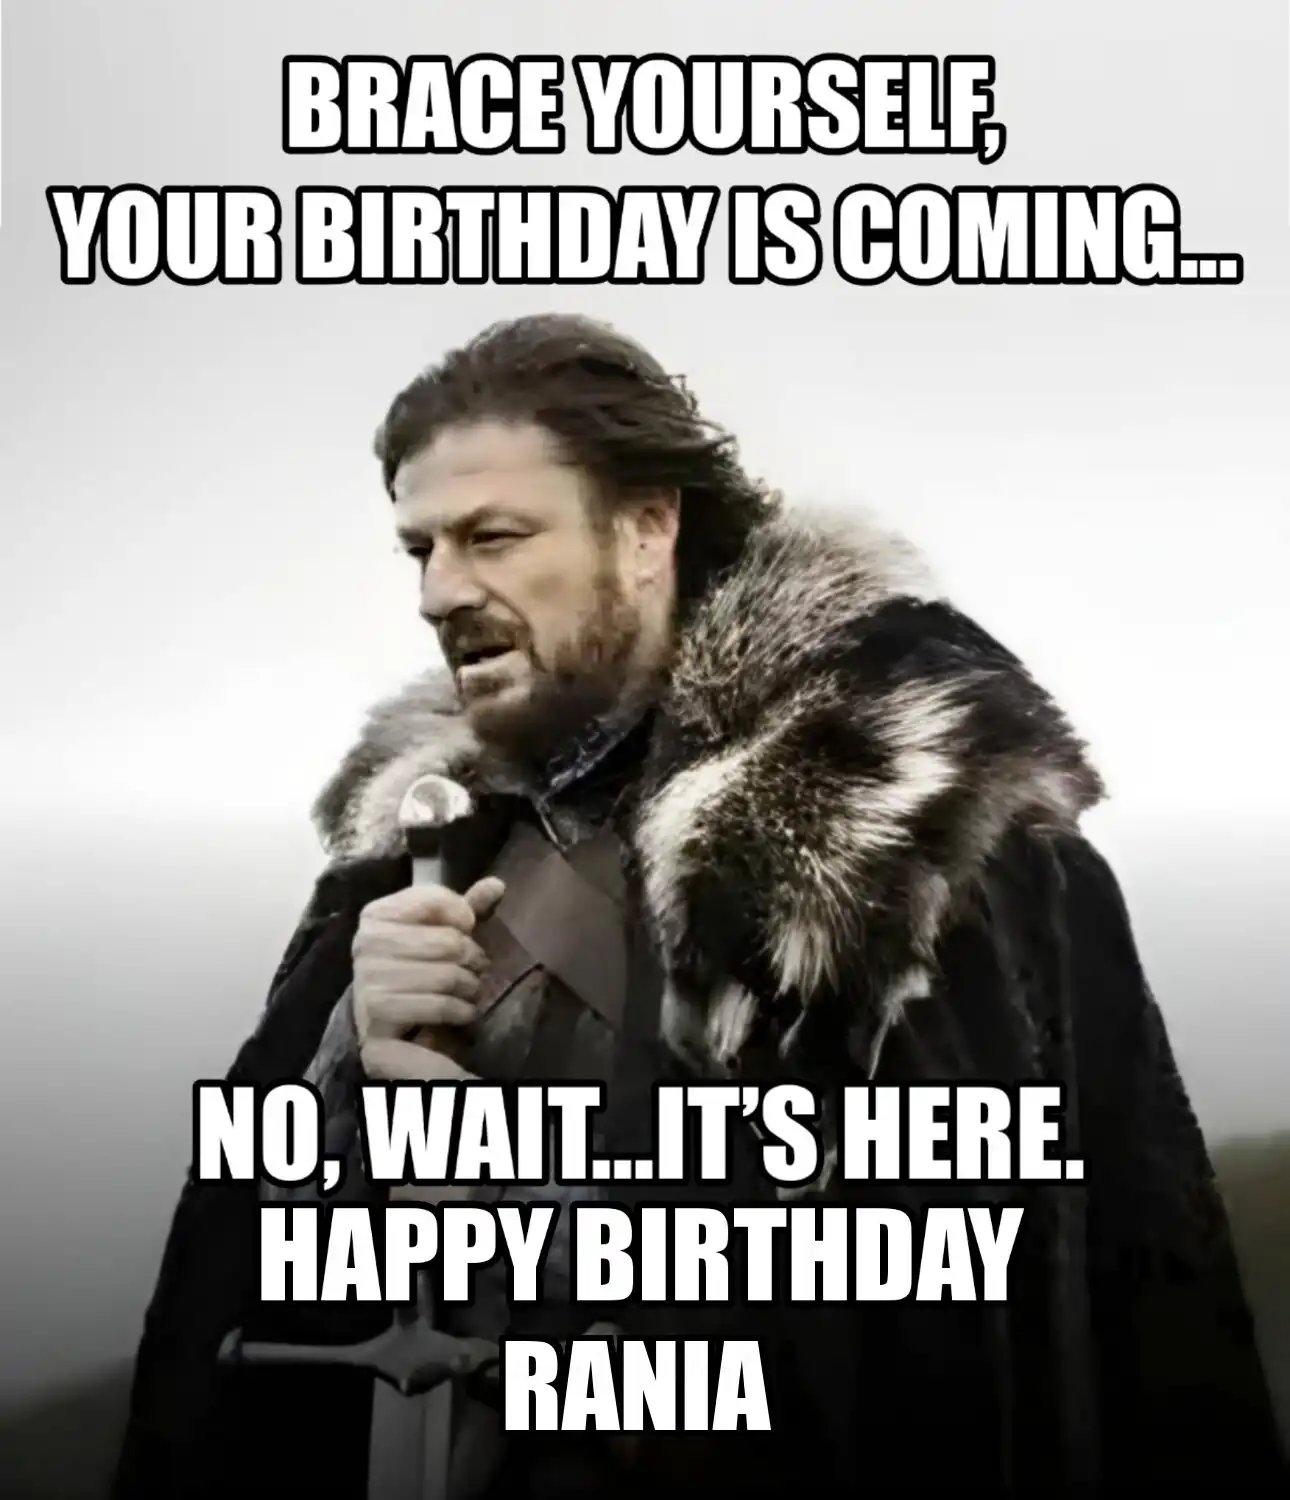 Happy Birthday Rania Brace Yourself Your Birthday Is Coming Meme